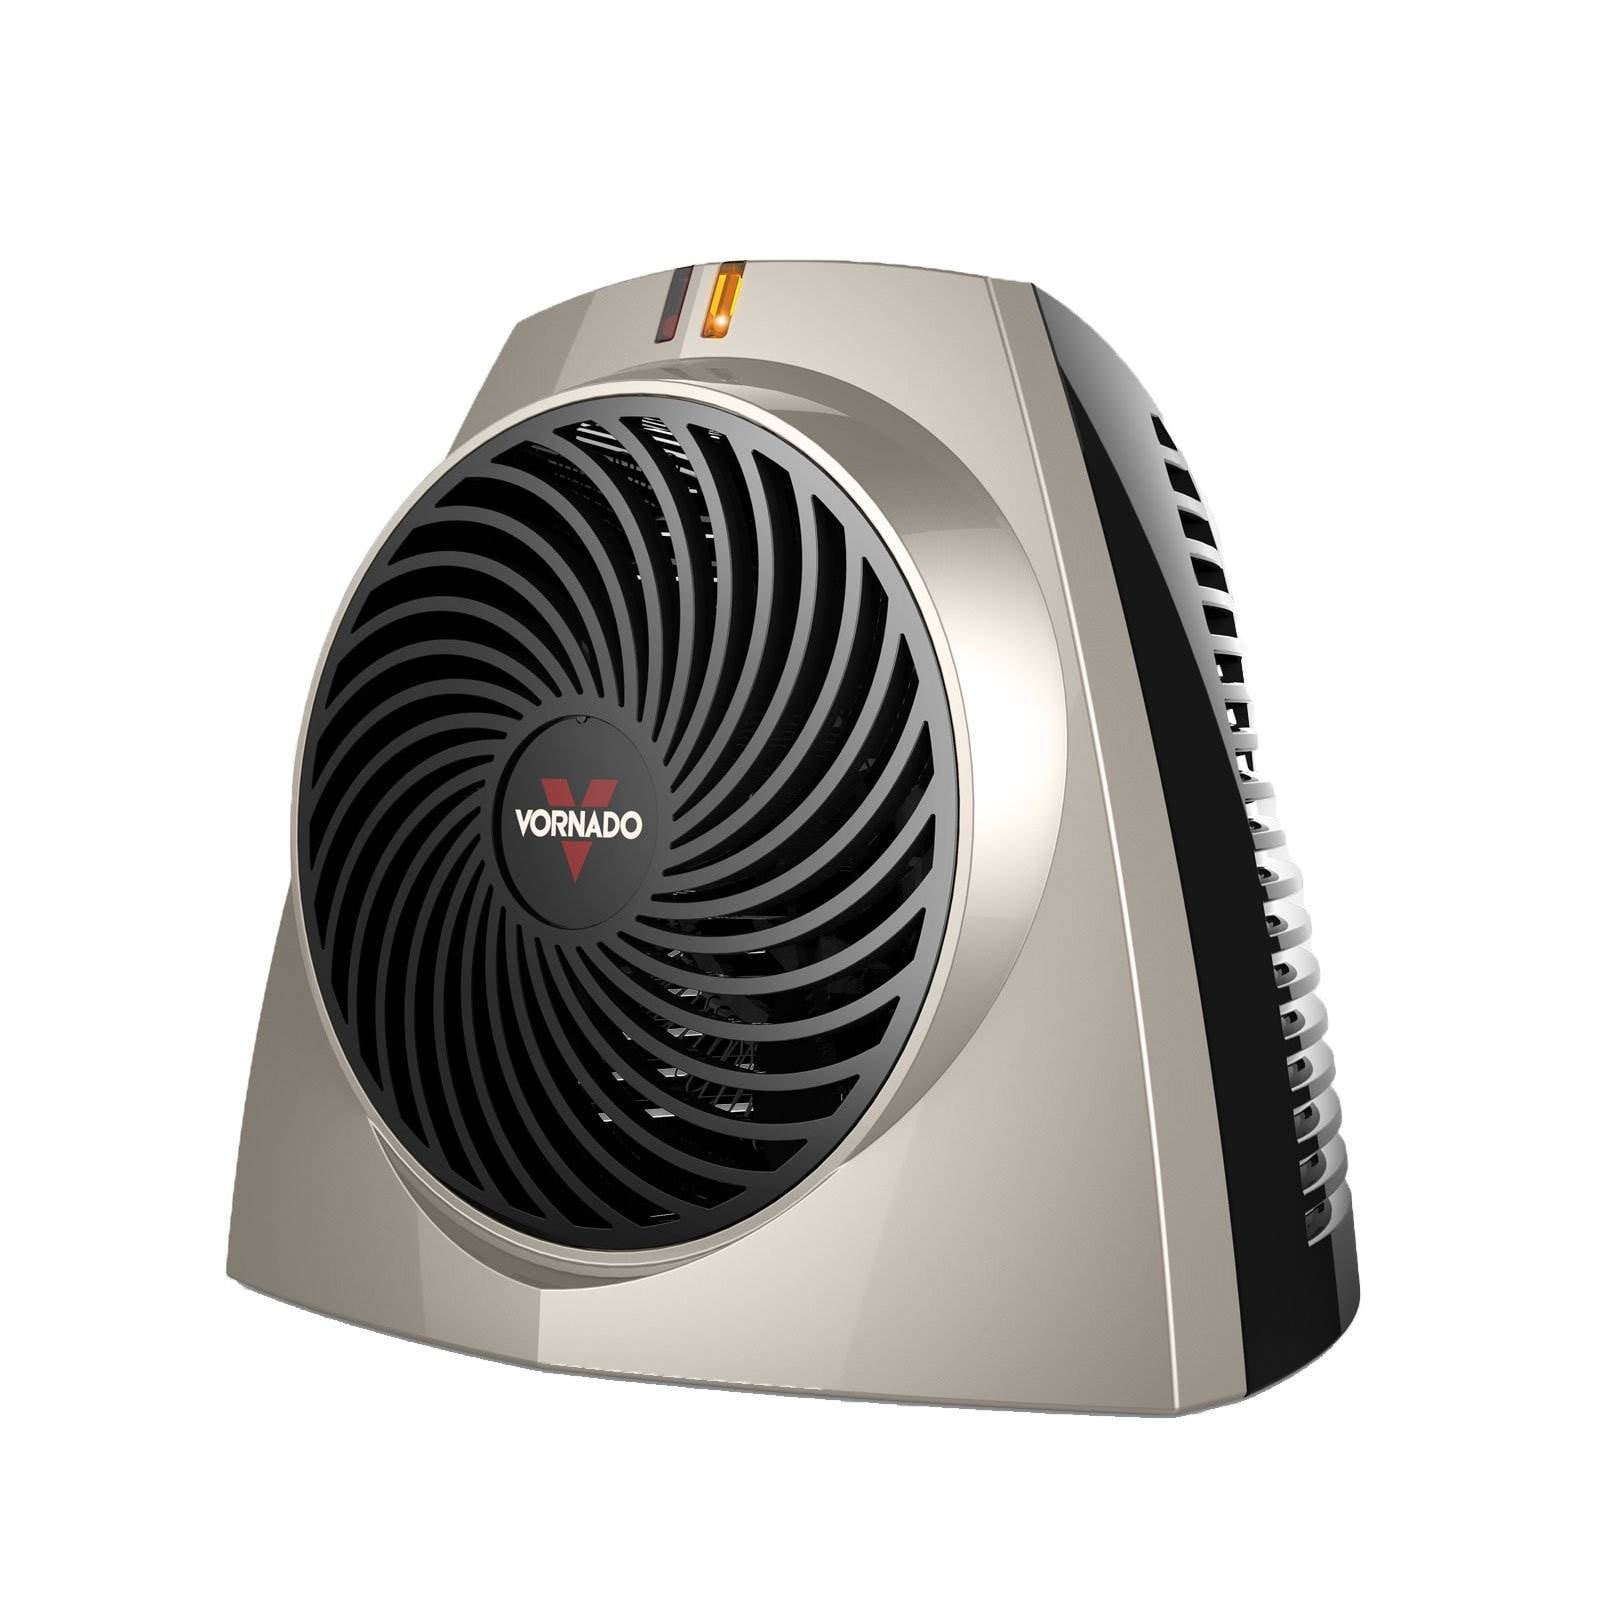 Vornado VH203 750W Space Heater Black/Gray for sale online 